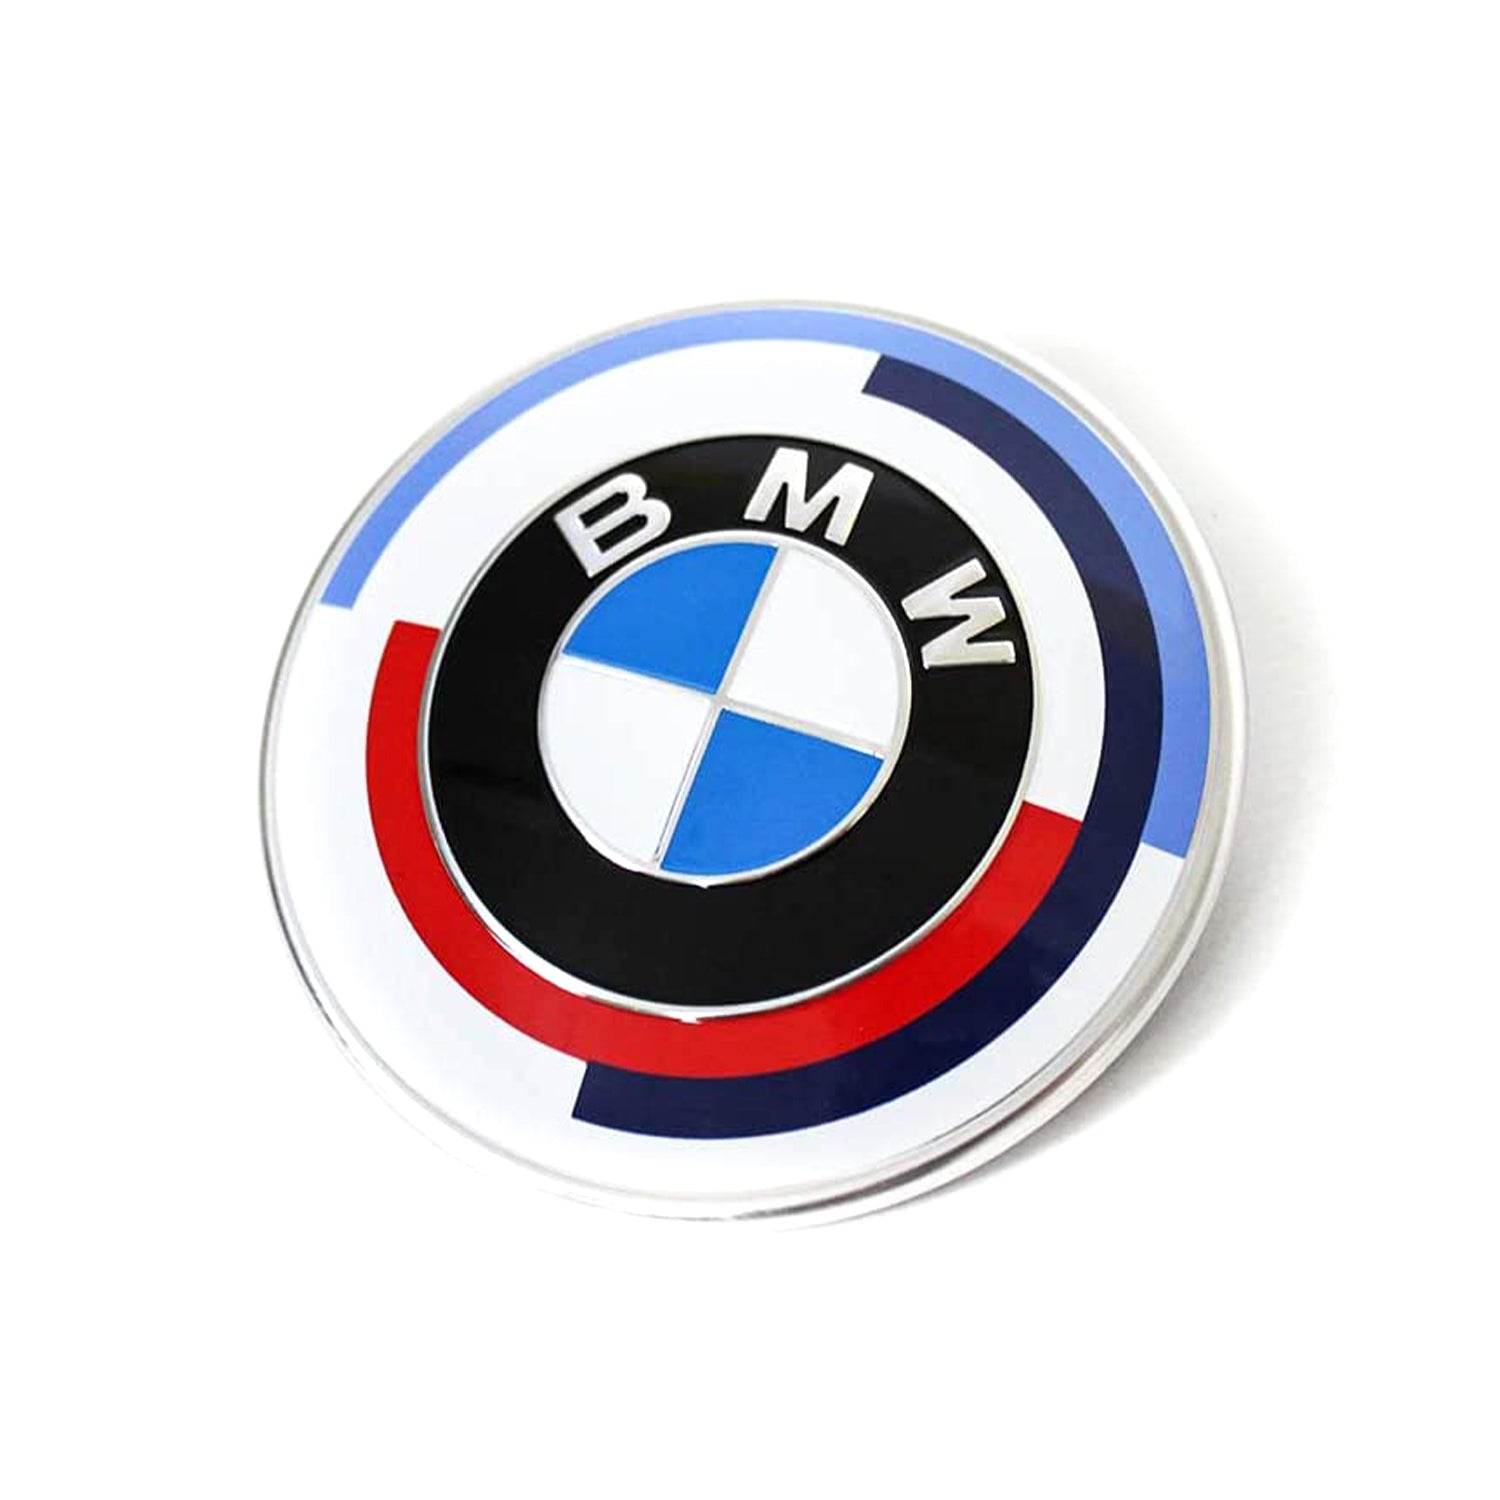 Genuine BMW E60 M5 50 Year Anniversary Heritage Rear Badge